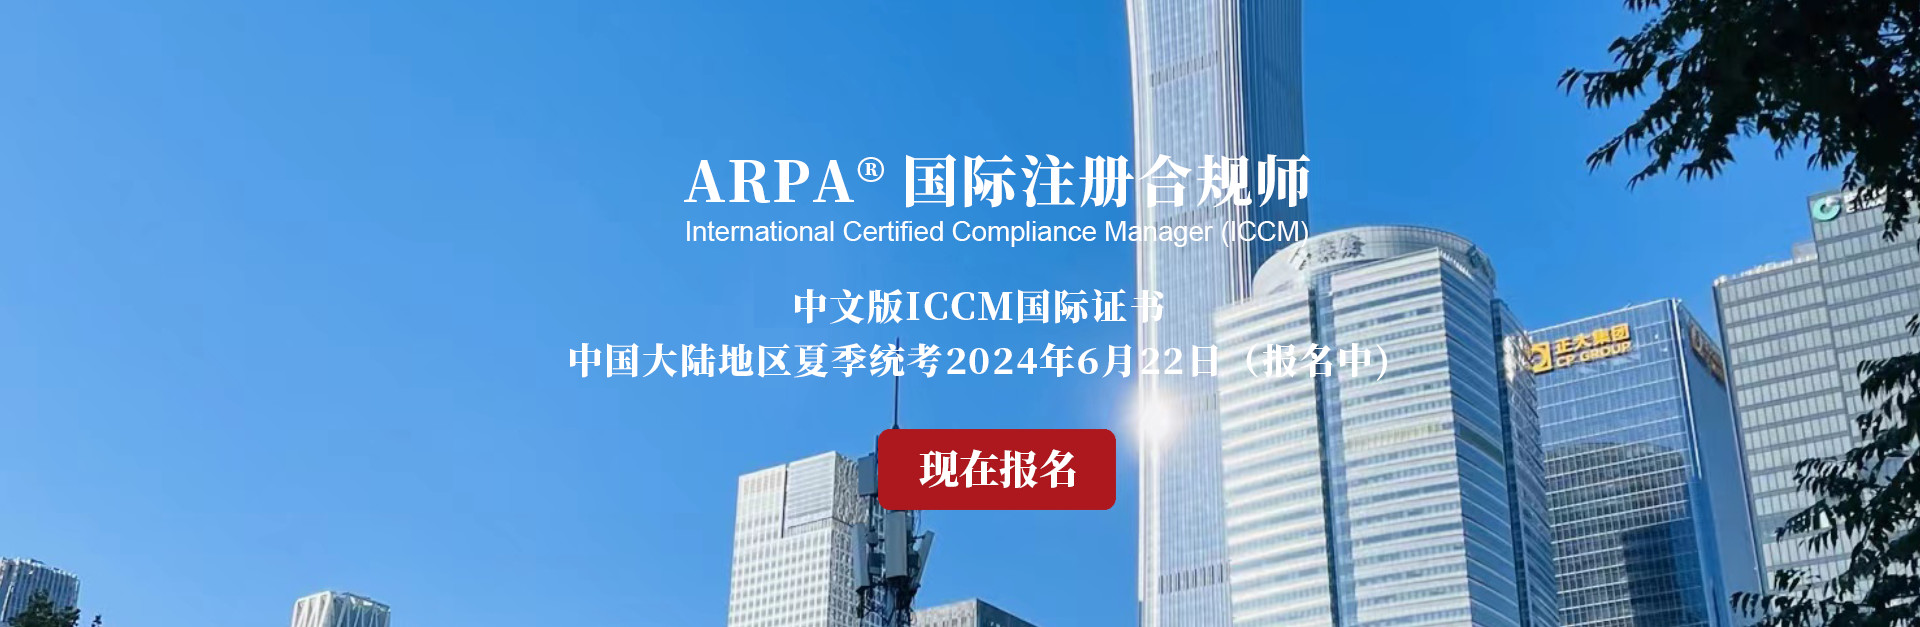 ARPA国际注册合规师1